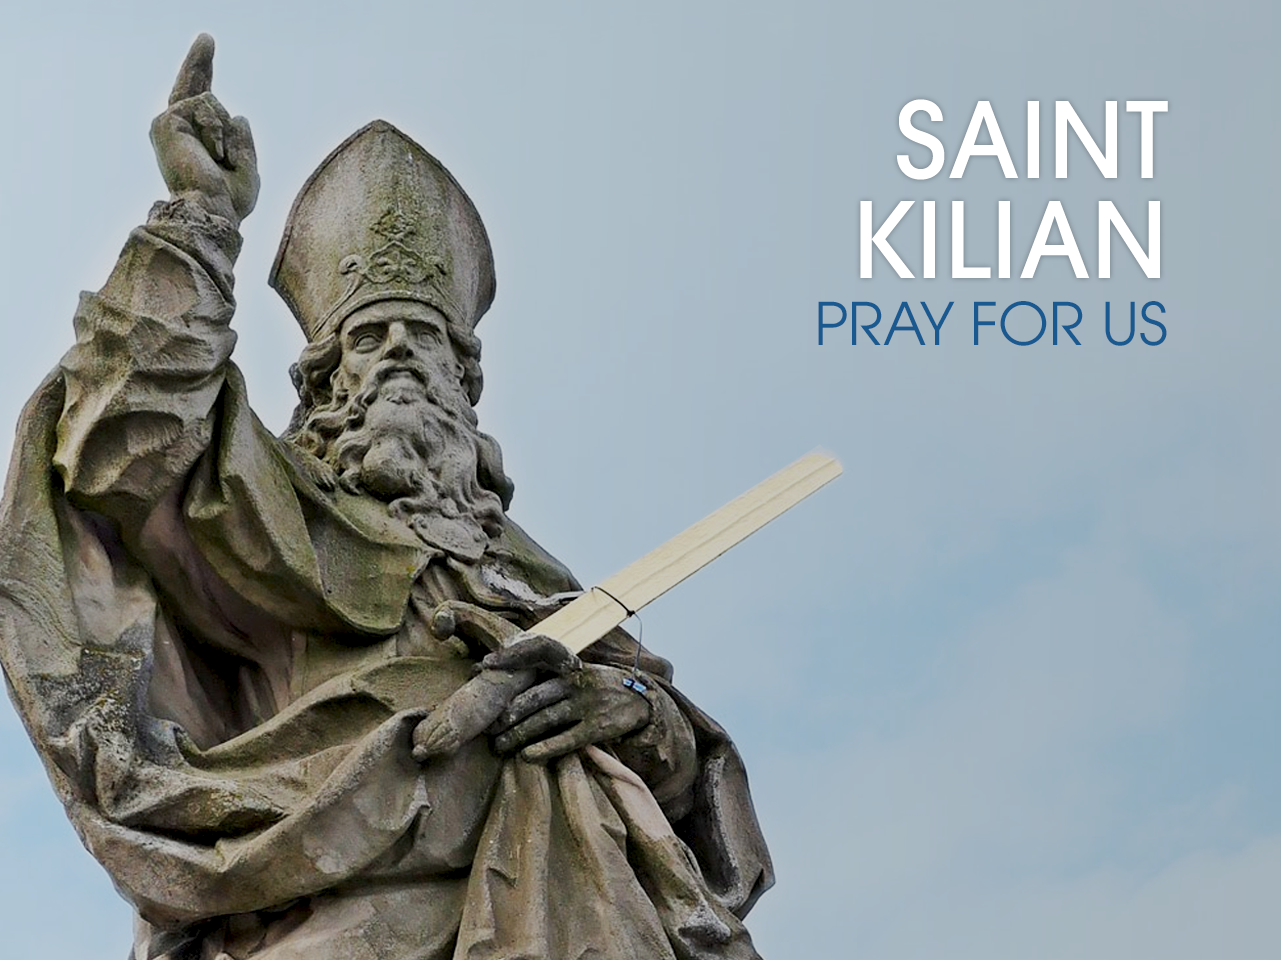 St. Kilian